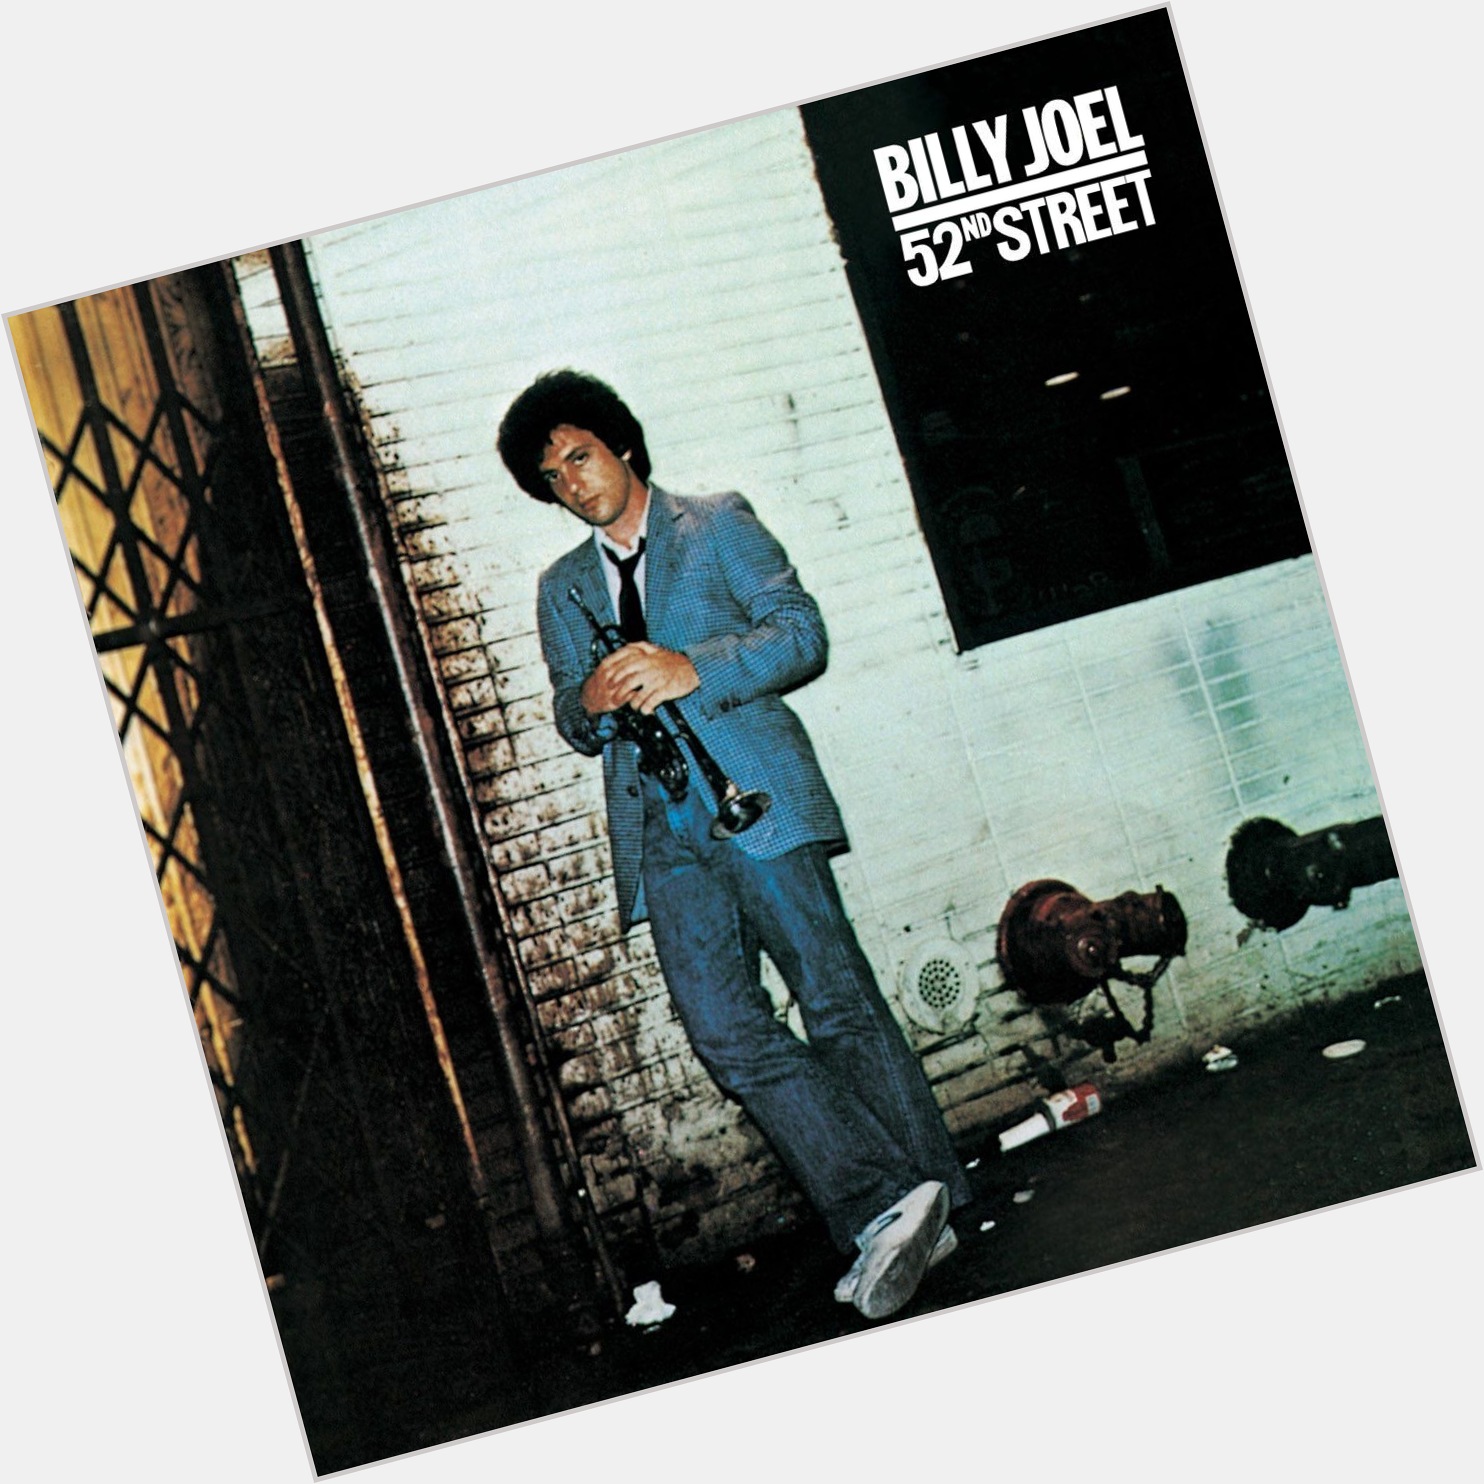 Happy Birthday Billy Joel A legendary Rock artist. We appreciate you.  